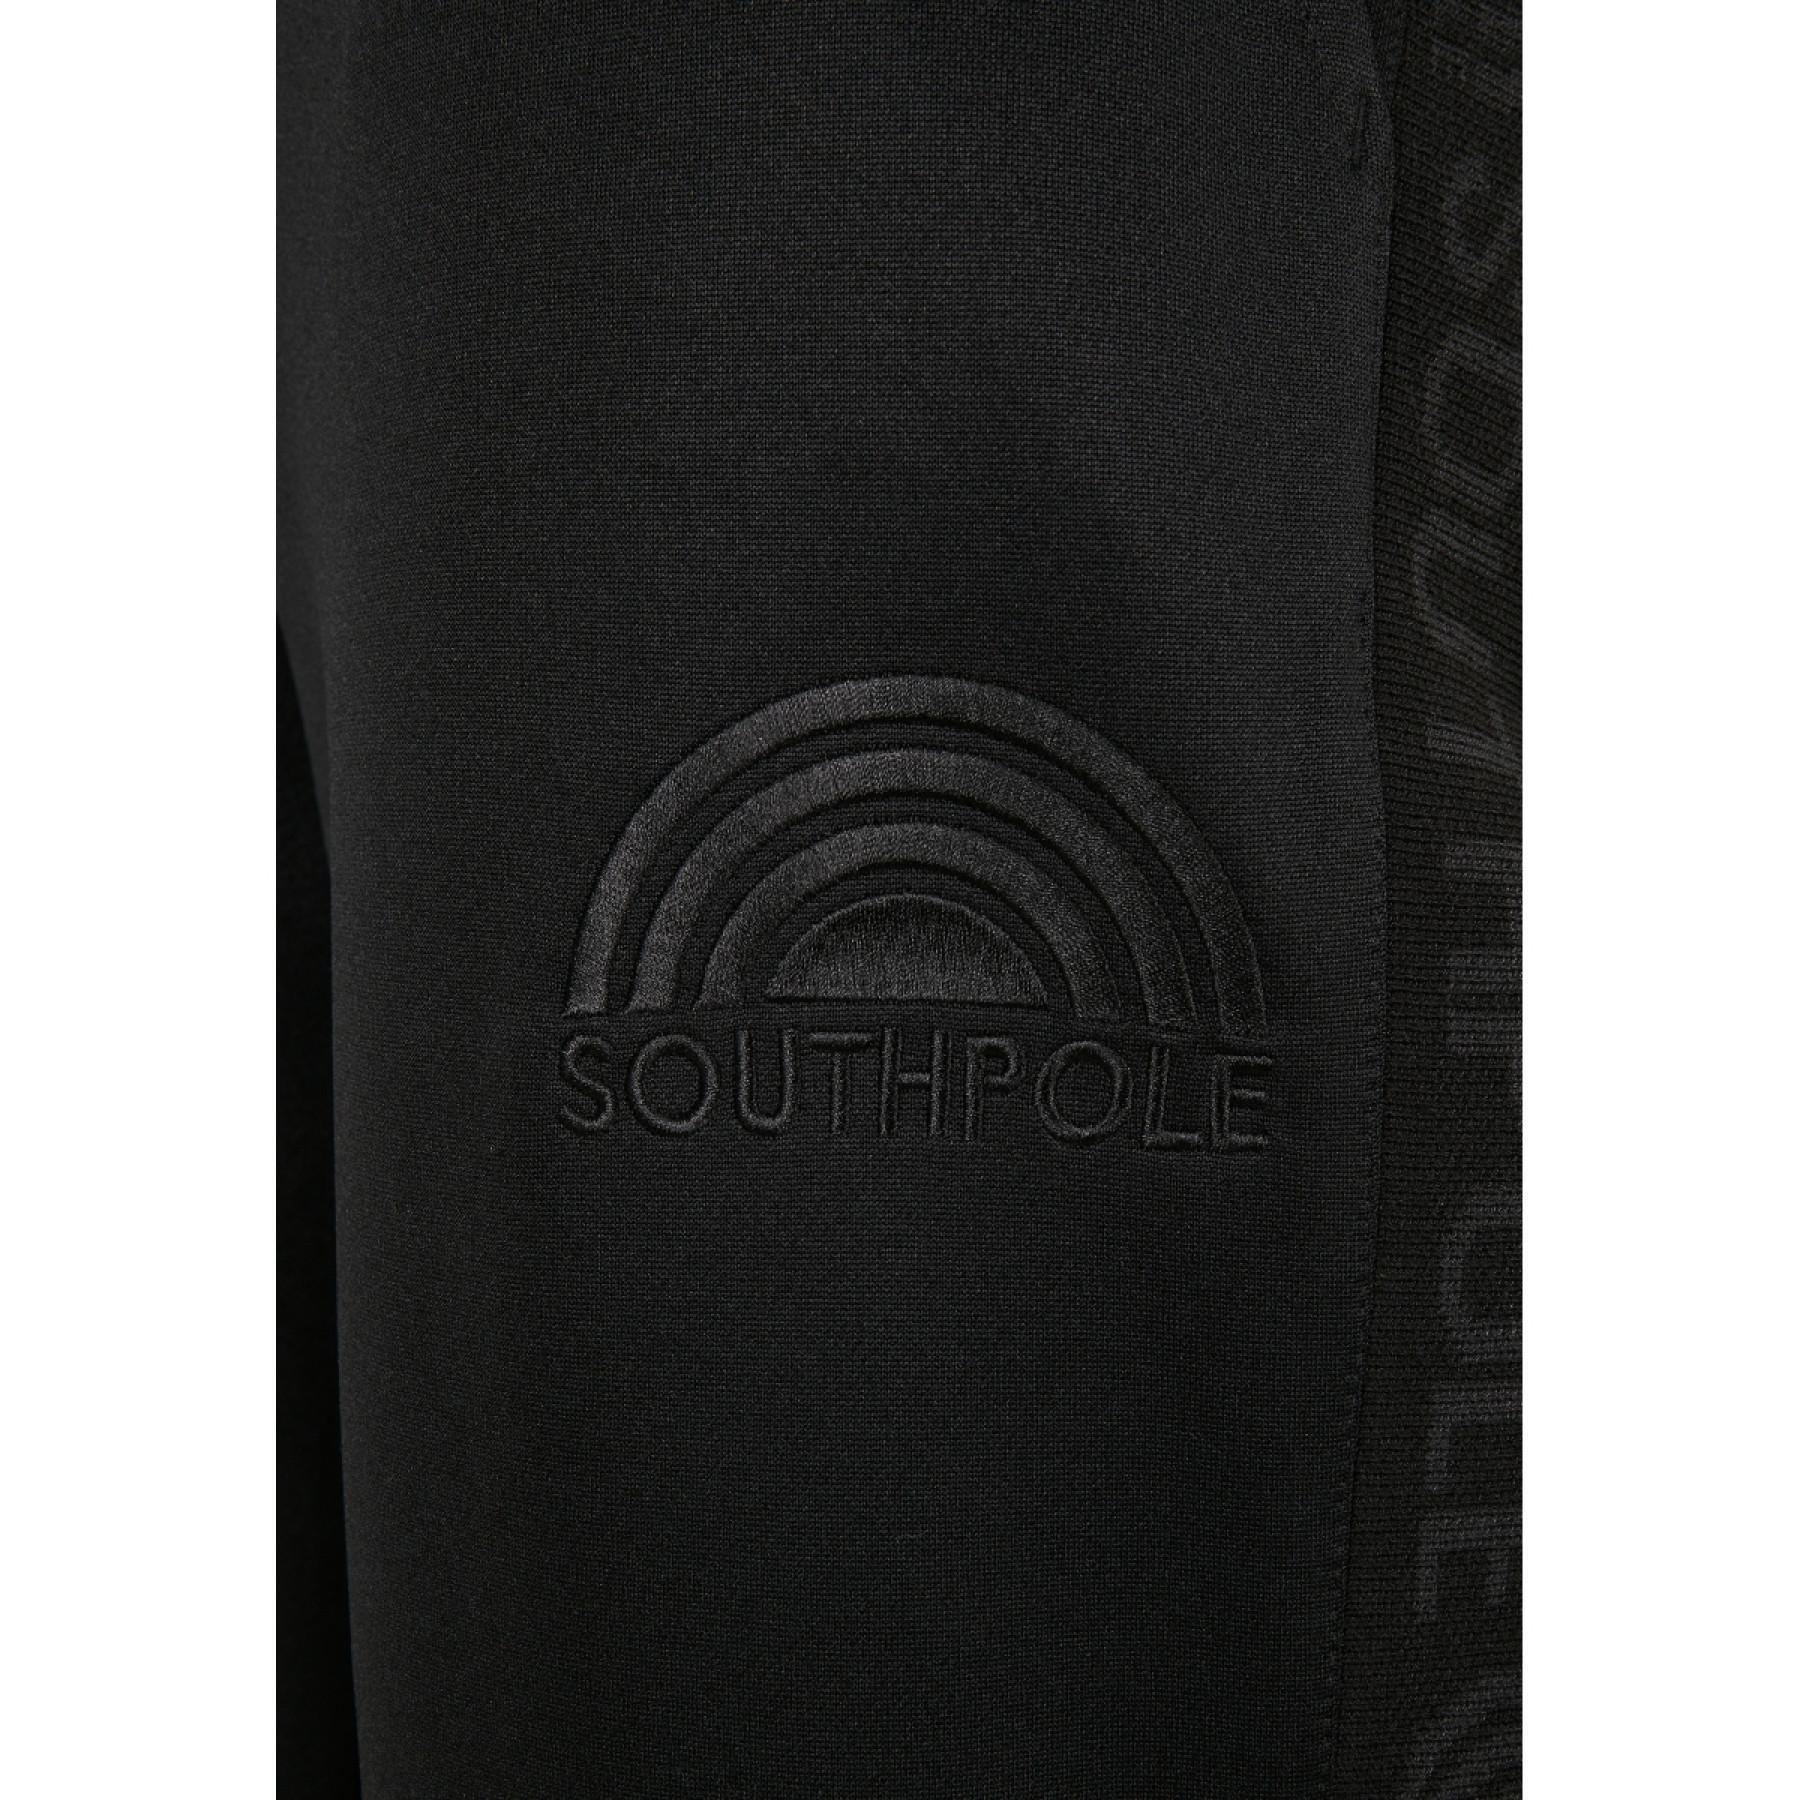 Pantaloni Southpole tricot with tape